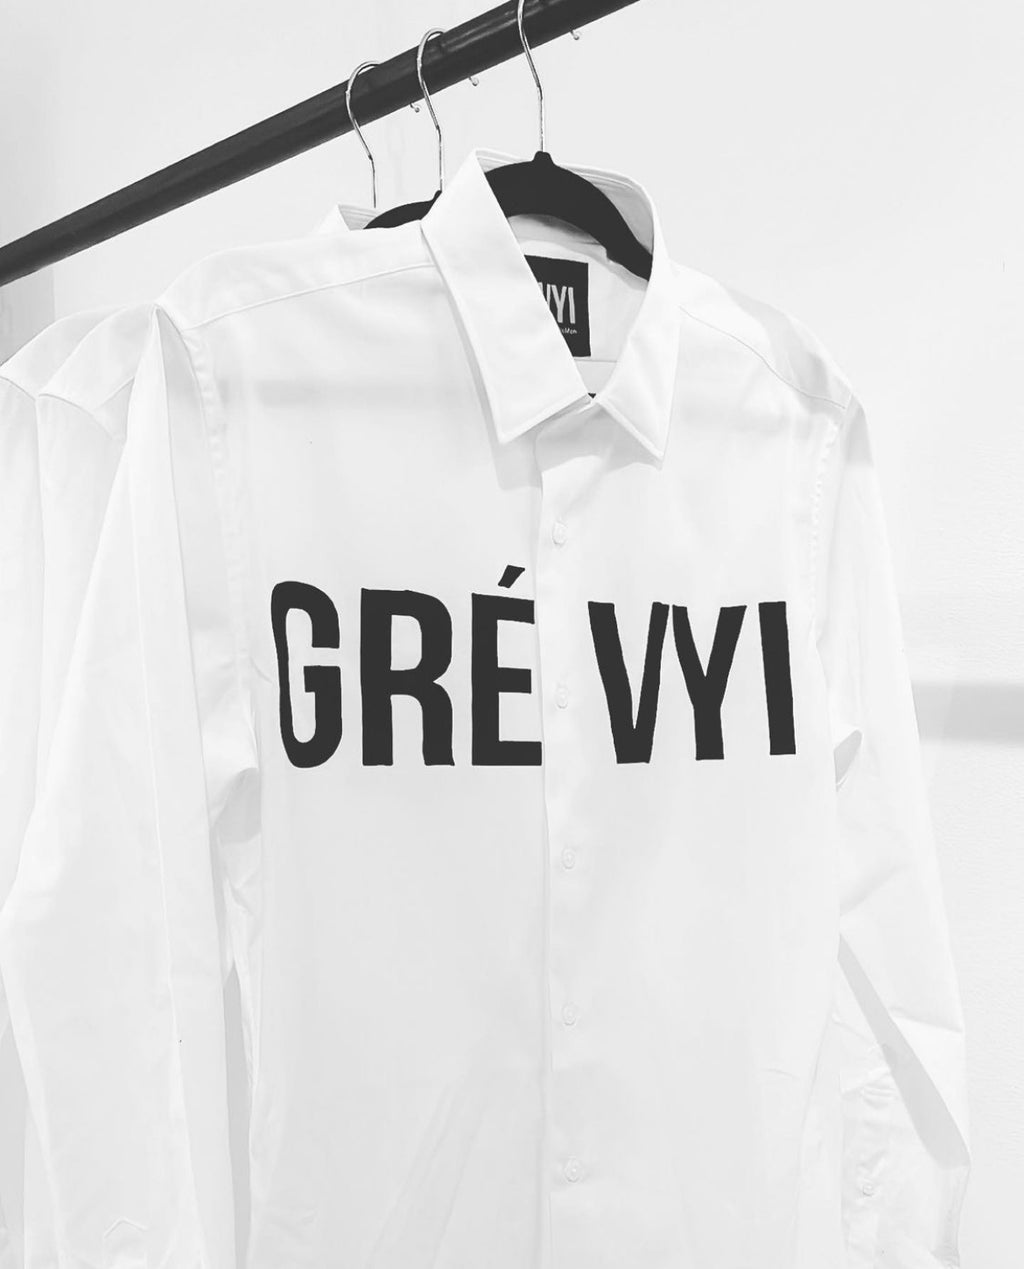 Grevyi Unisex Dress shirt